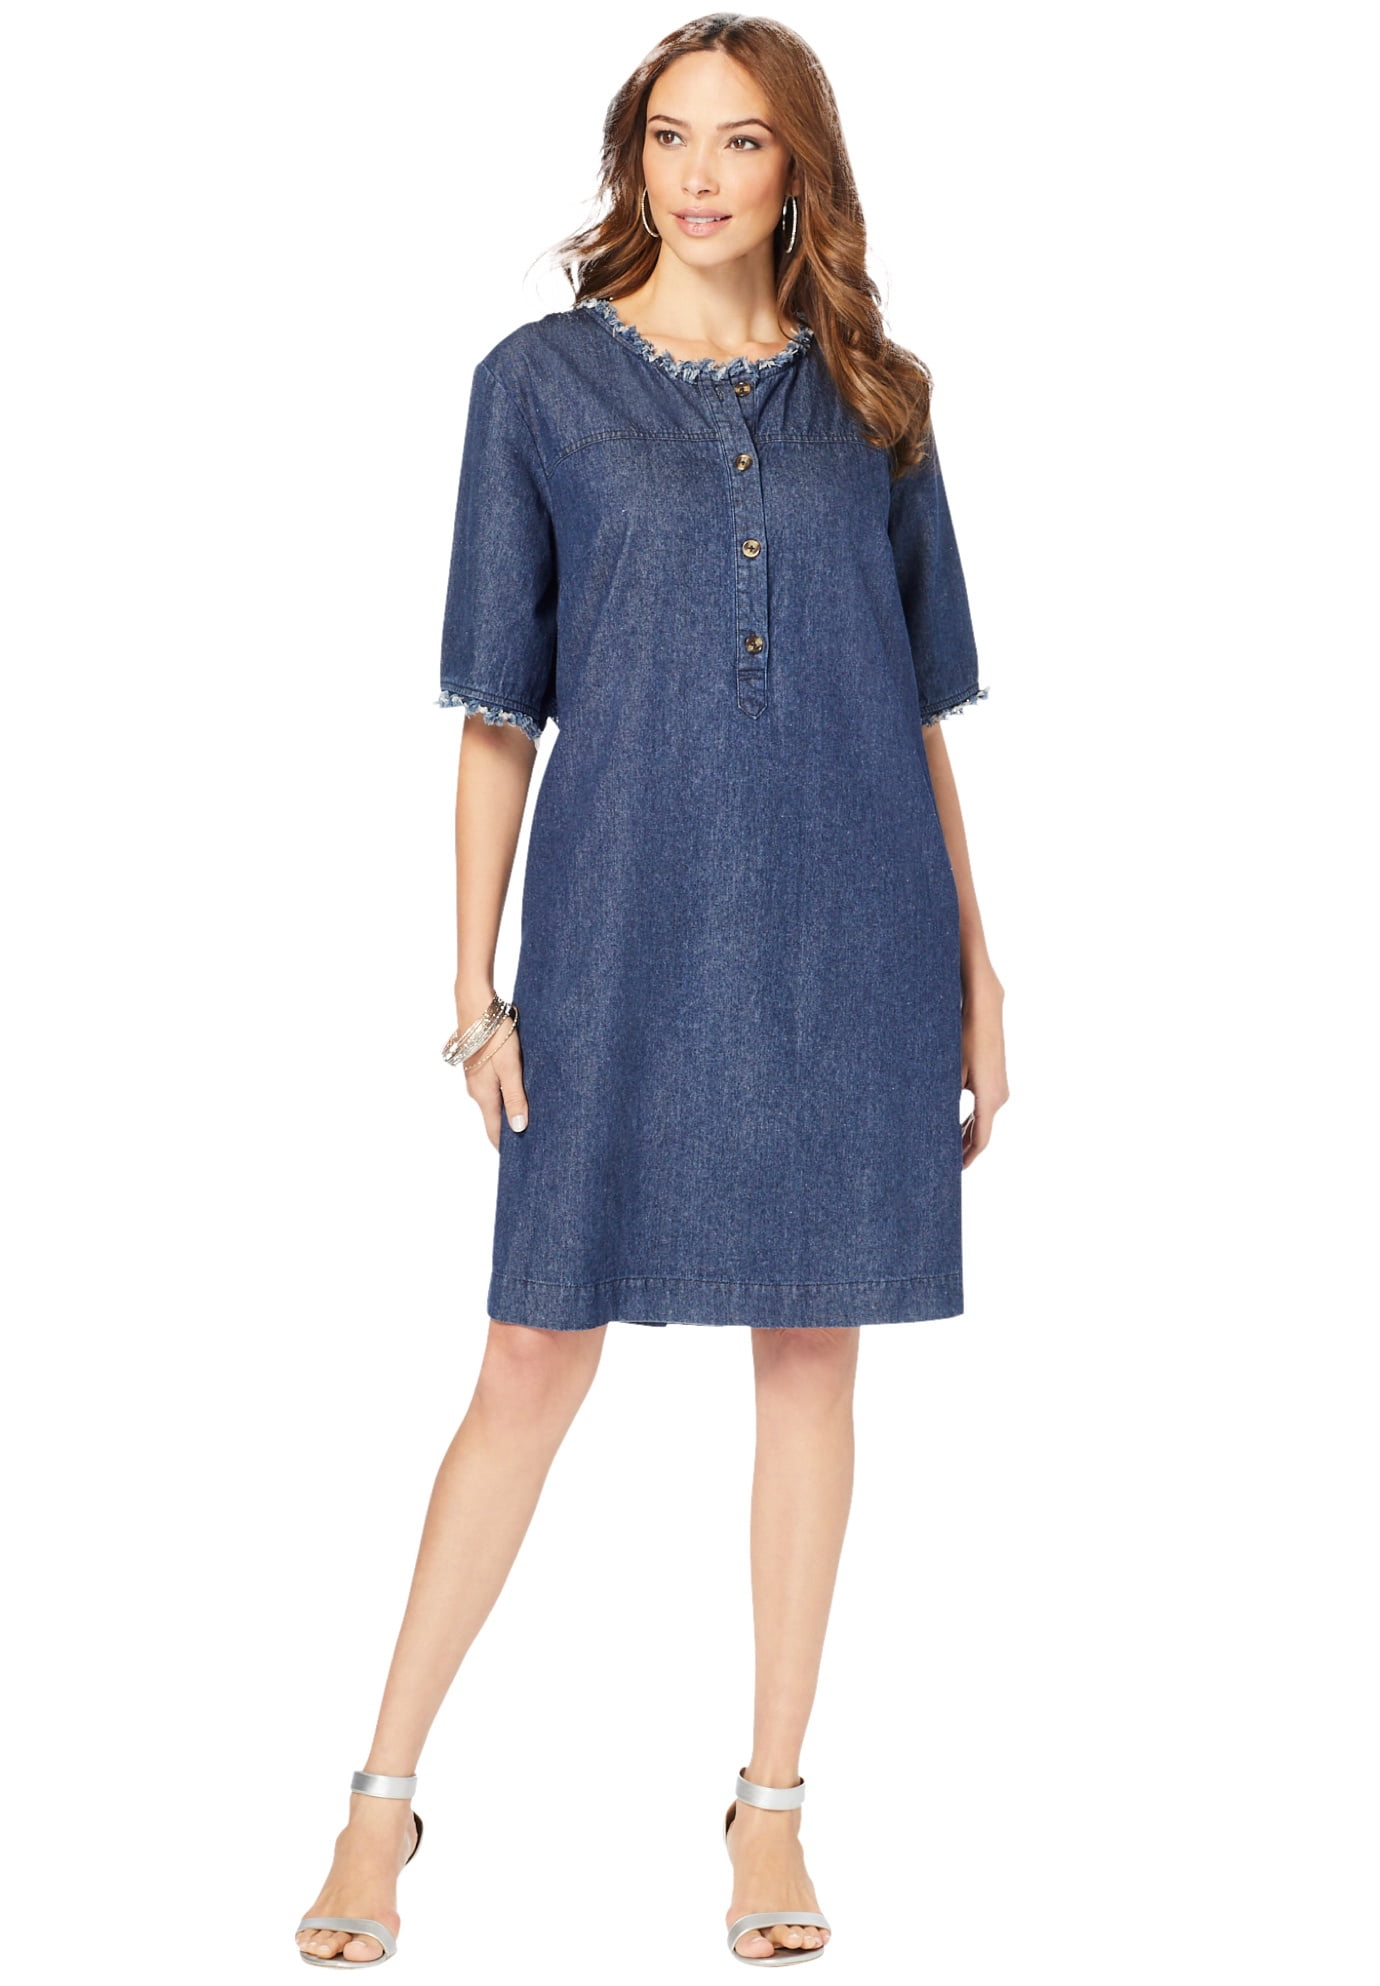 Roaman's Women's Plus Size Denim Shirtdress Dress - Walmart.com